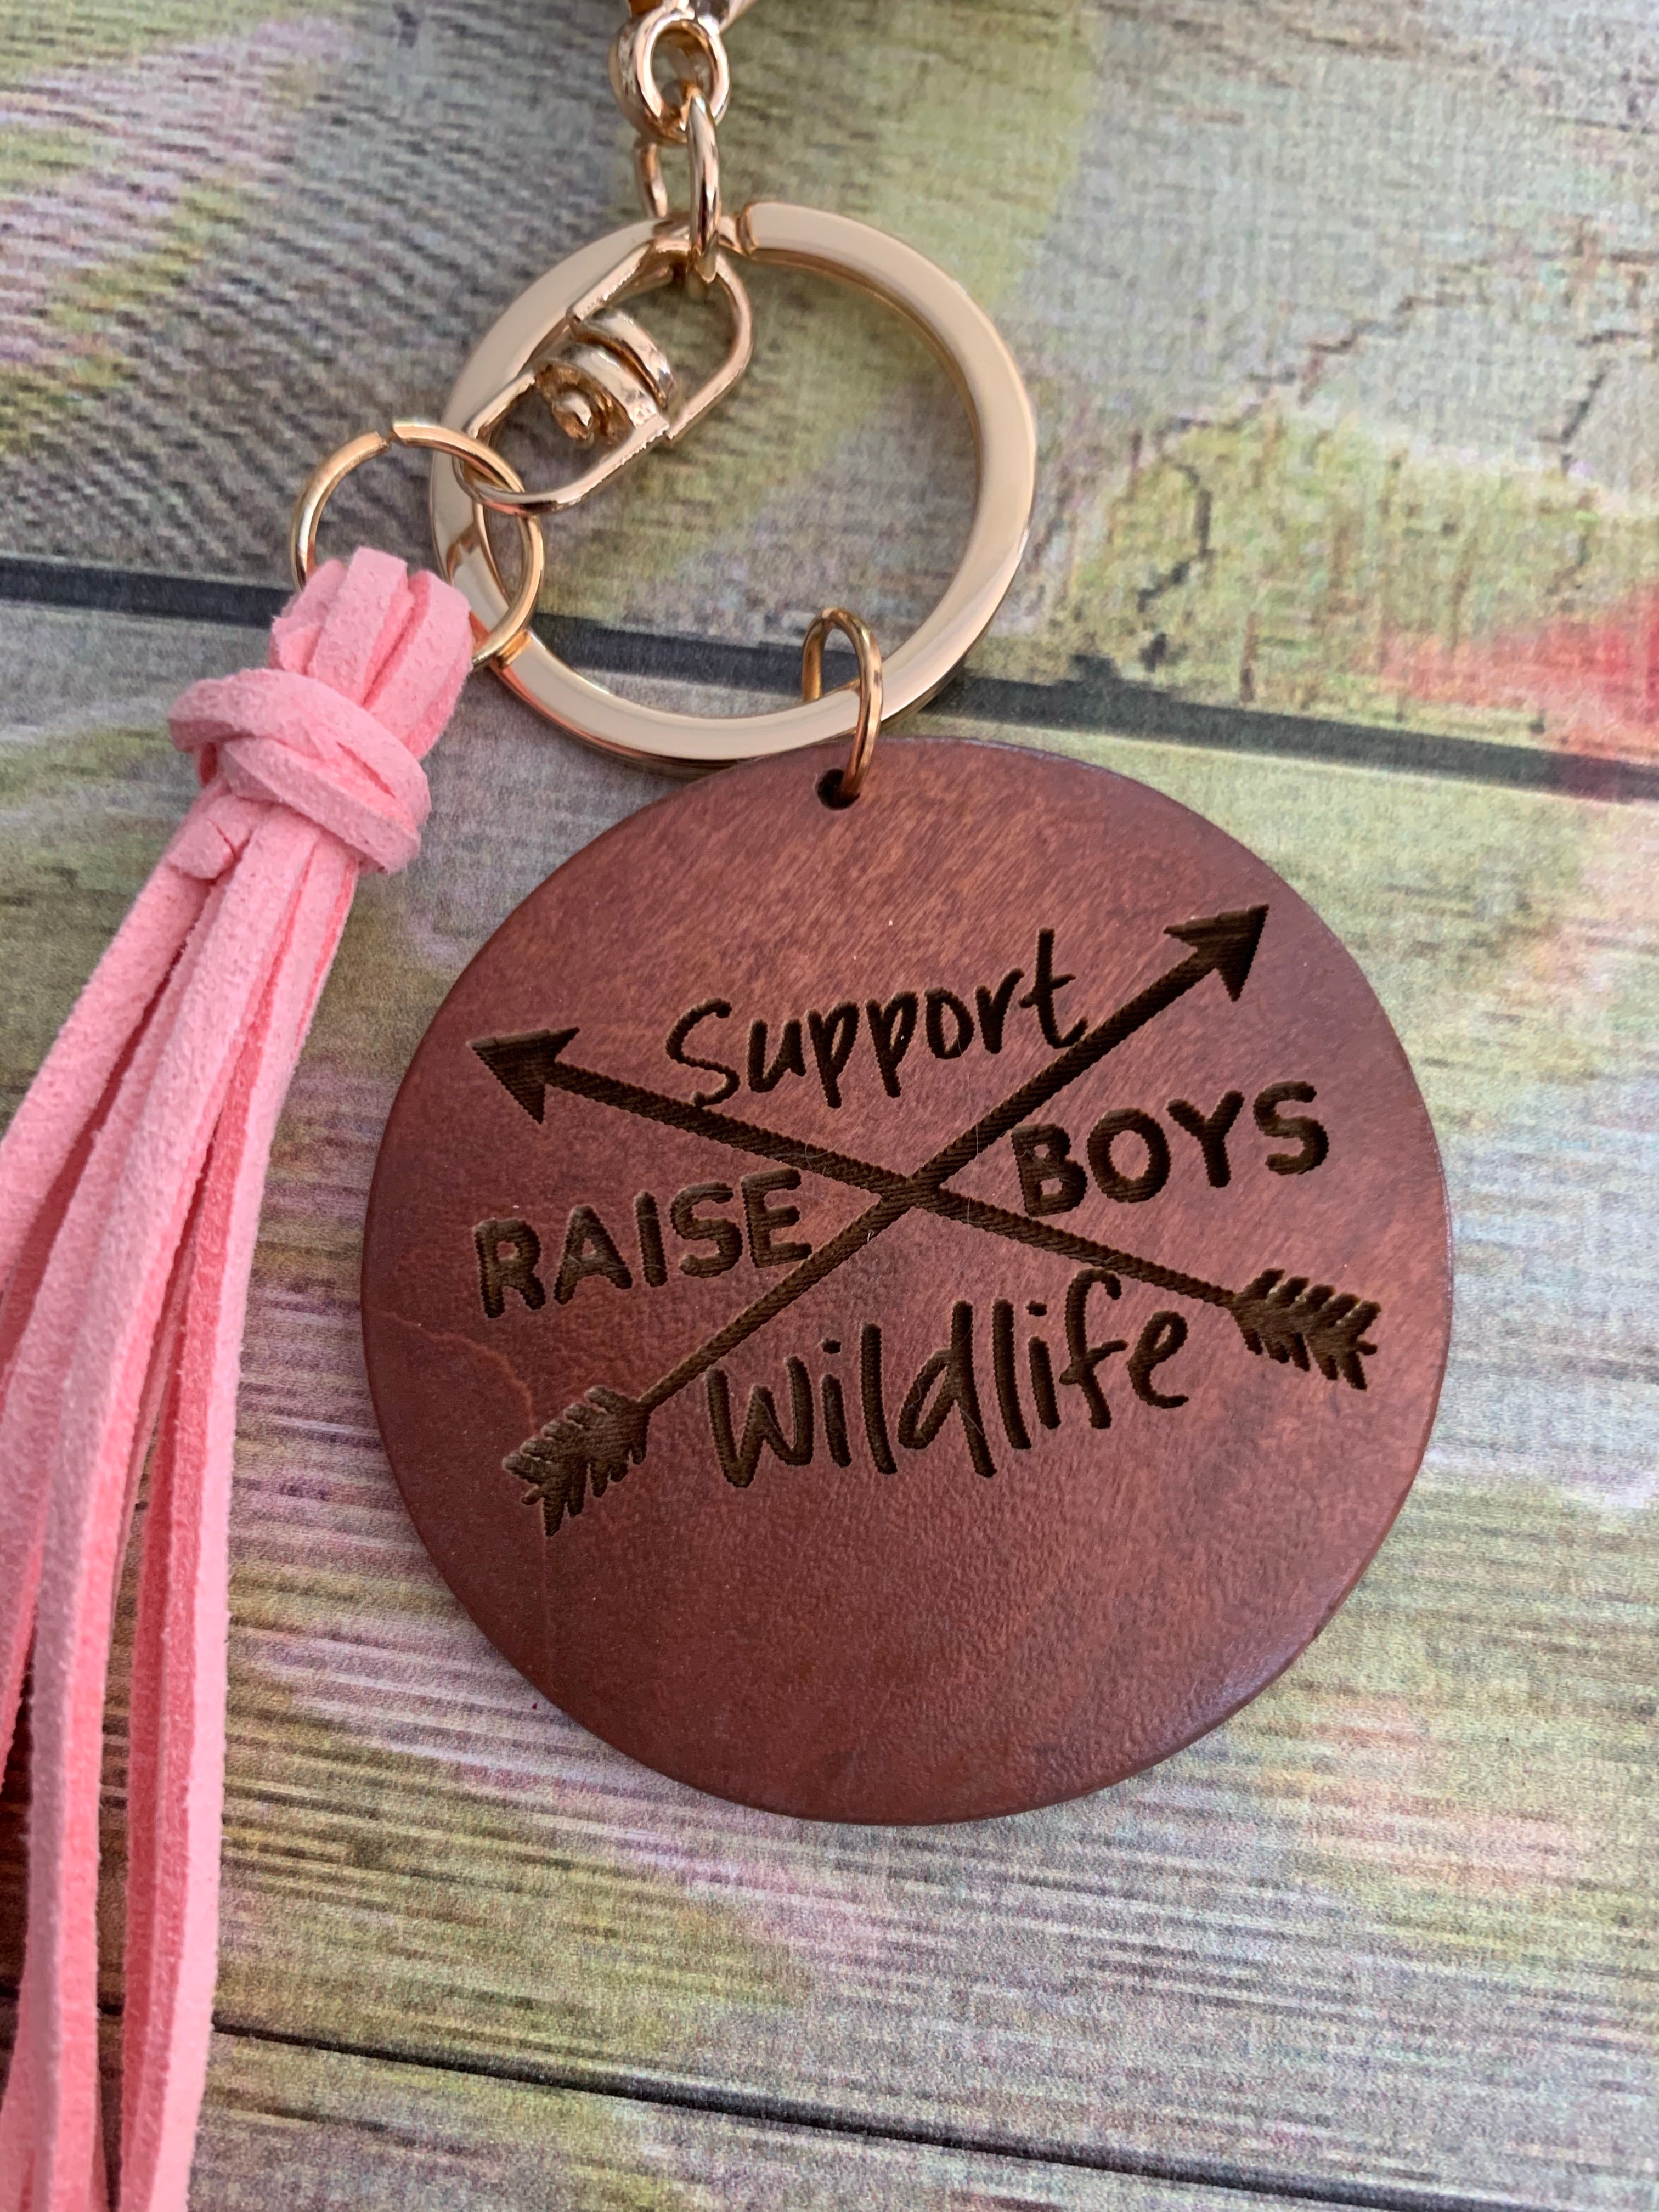 Support Wildlife Raise Boys Bangle Bracelet Keychain